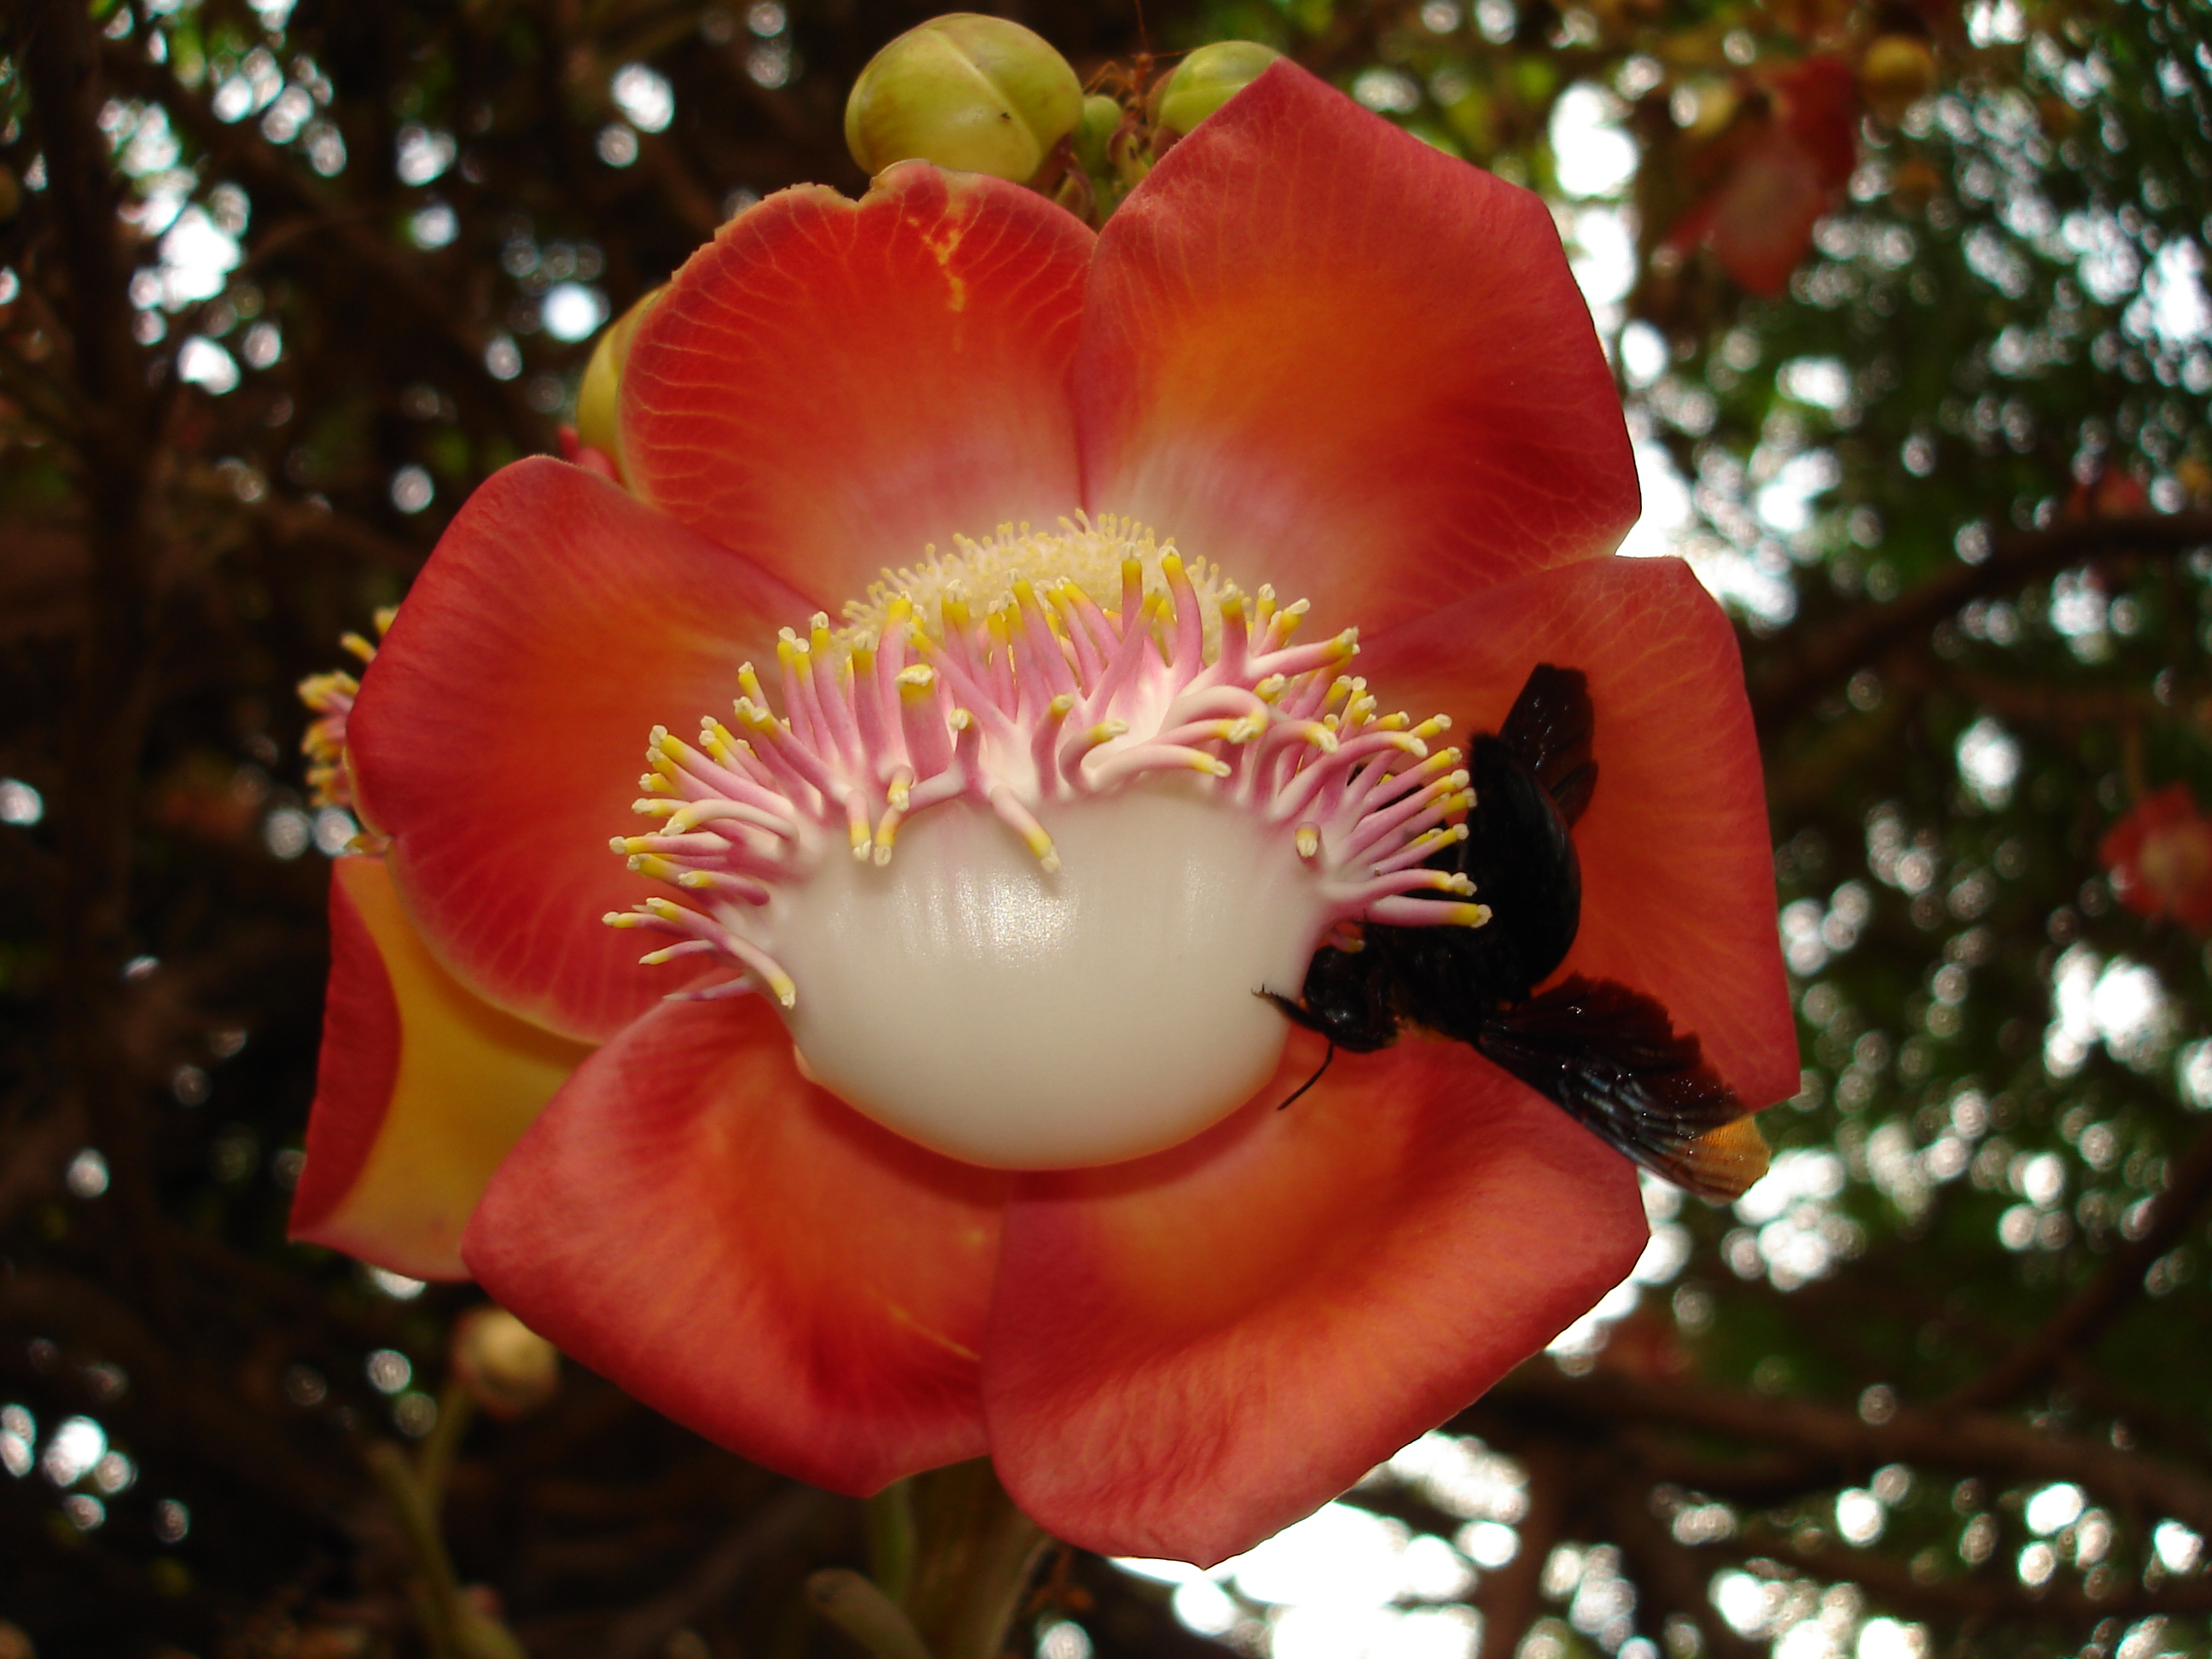 Beetle on flower,coimbatore - panoramio